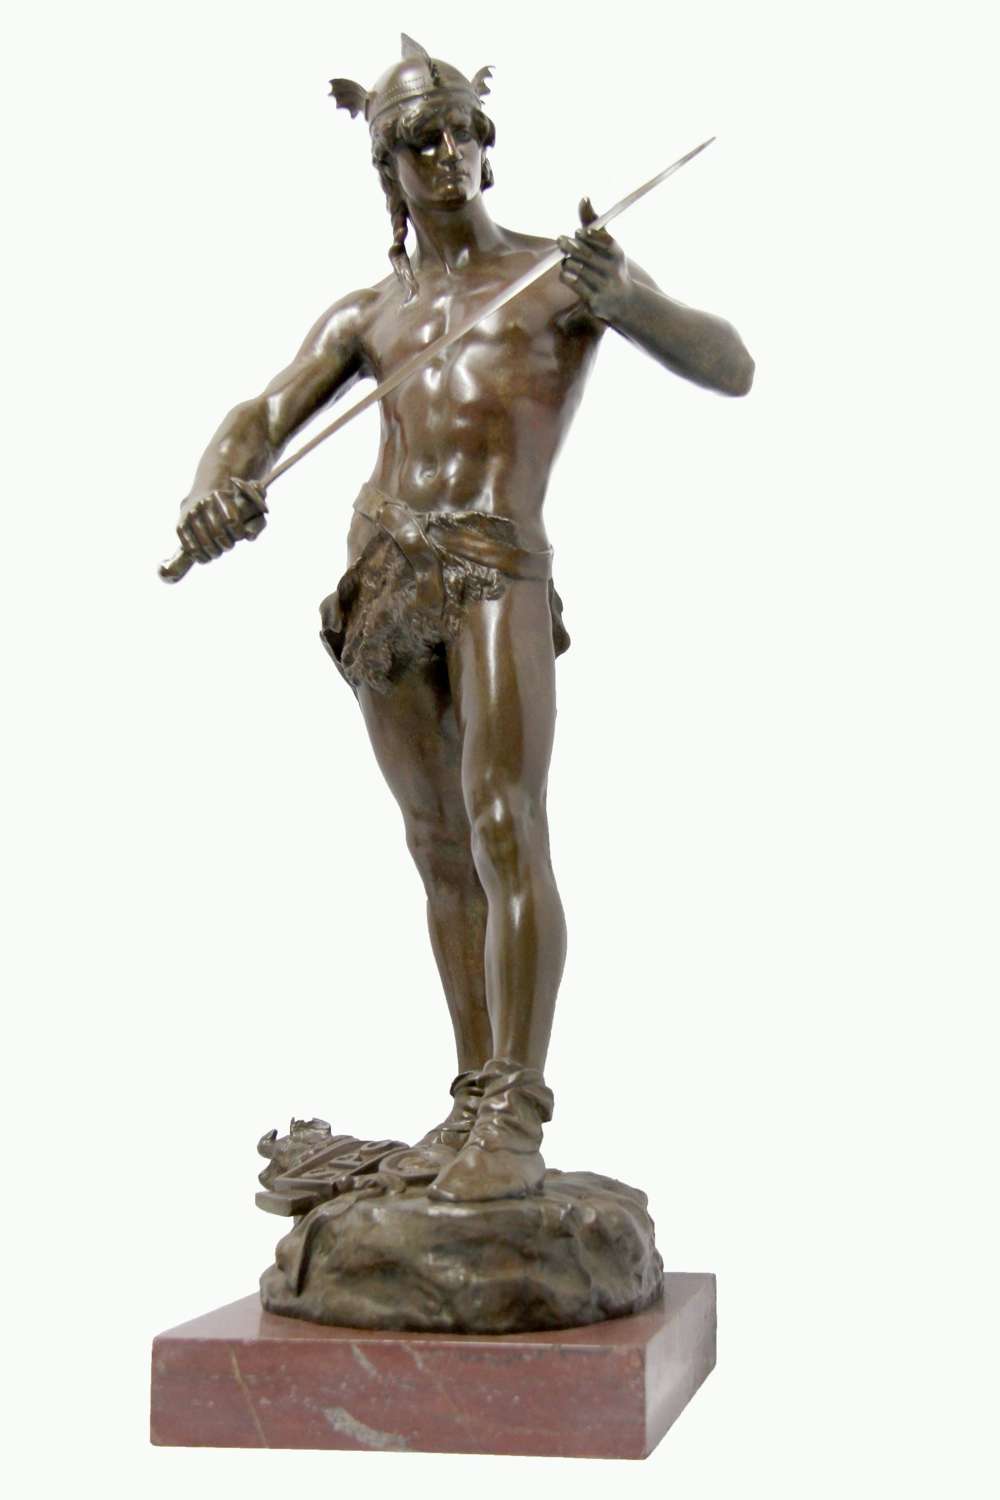 Impressive Bronze Figure Of A Warrior, Sword Of Valor